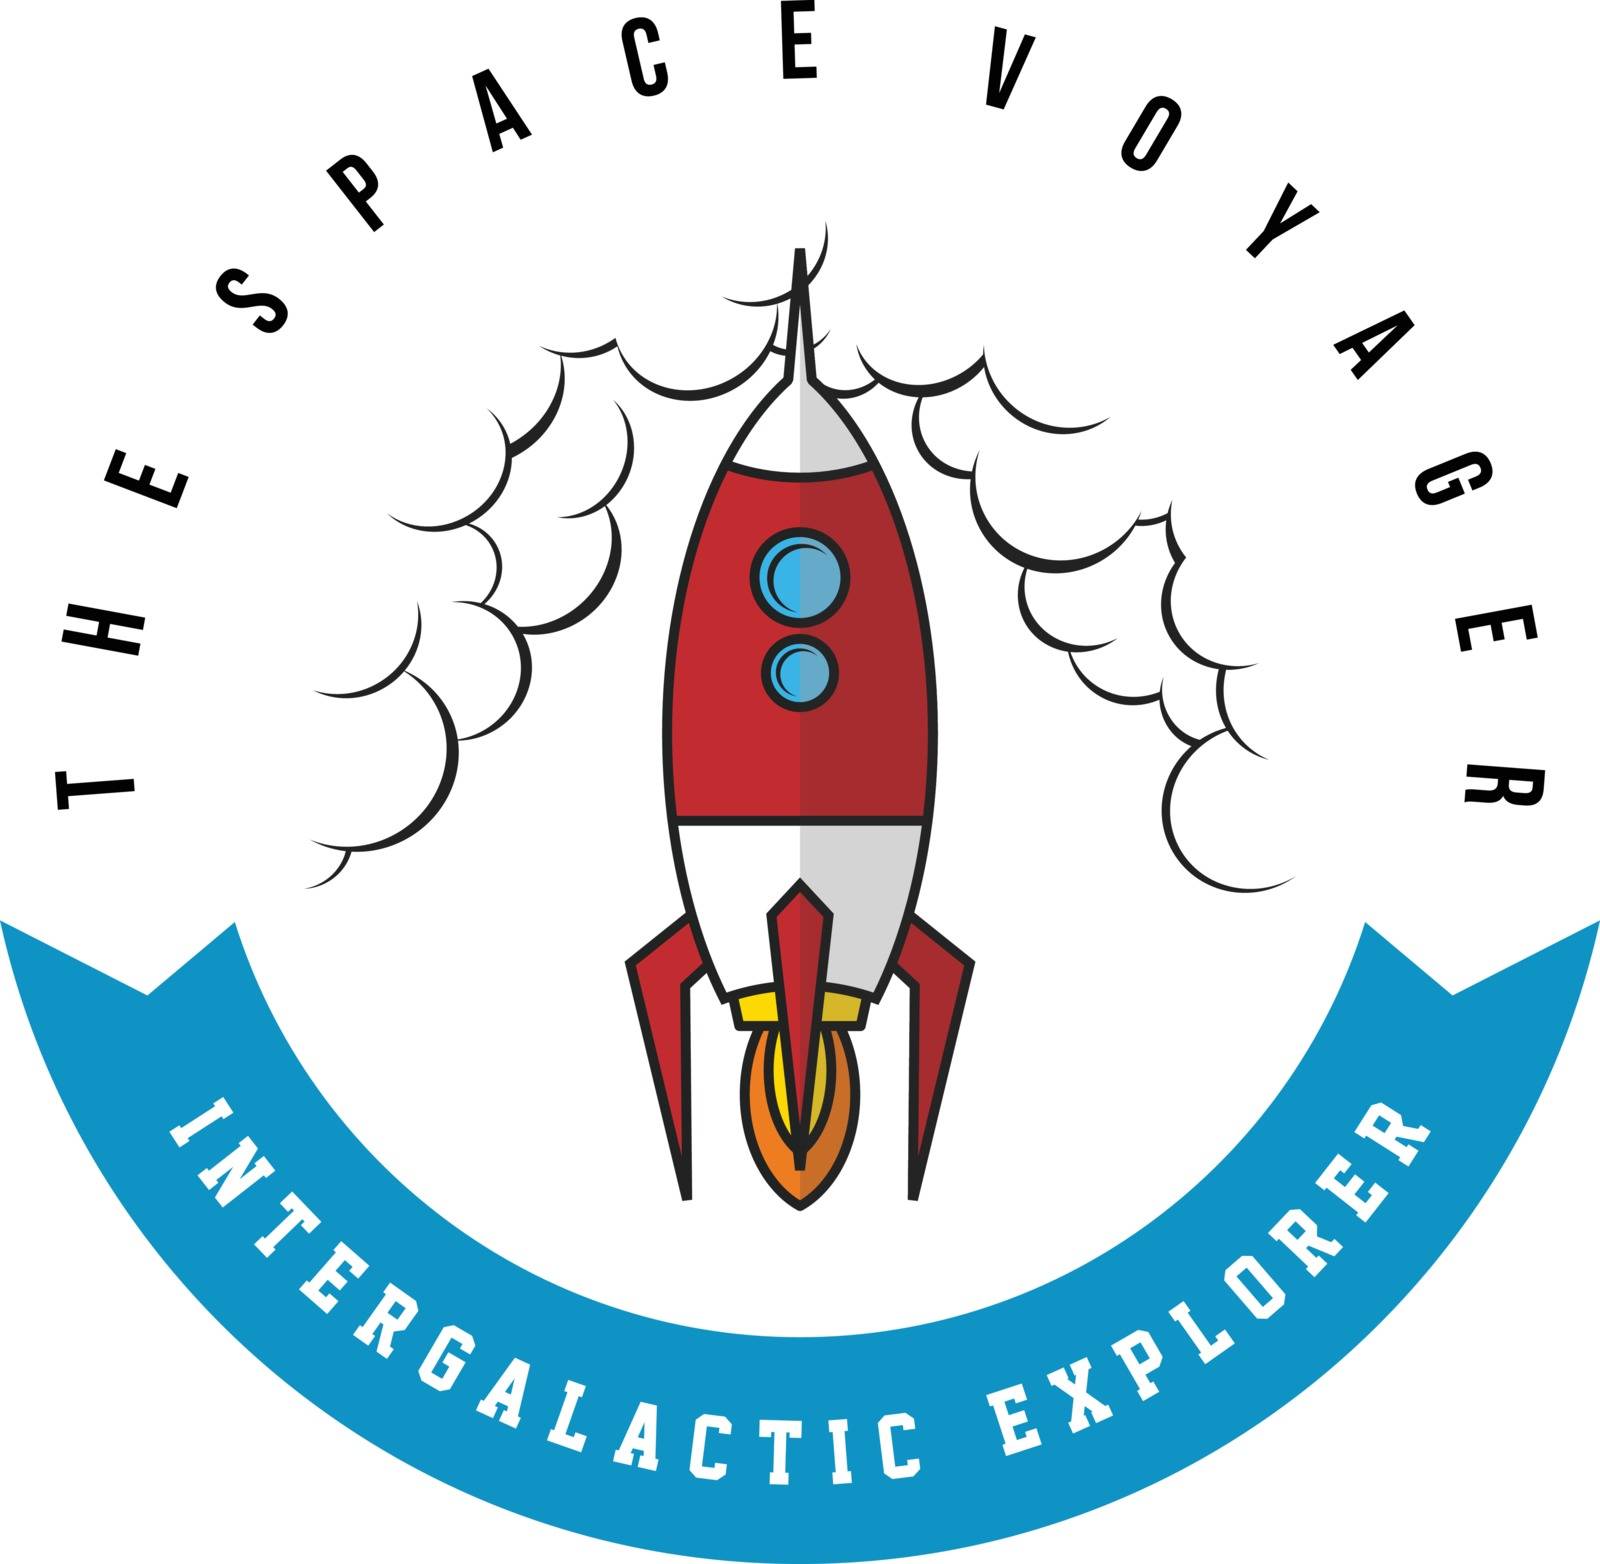 space exploration shuttle ship badge label logo icon vector